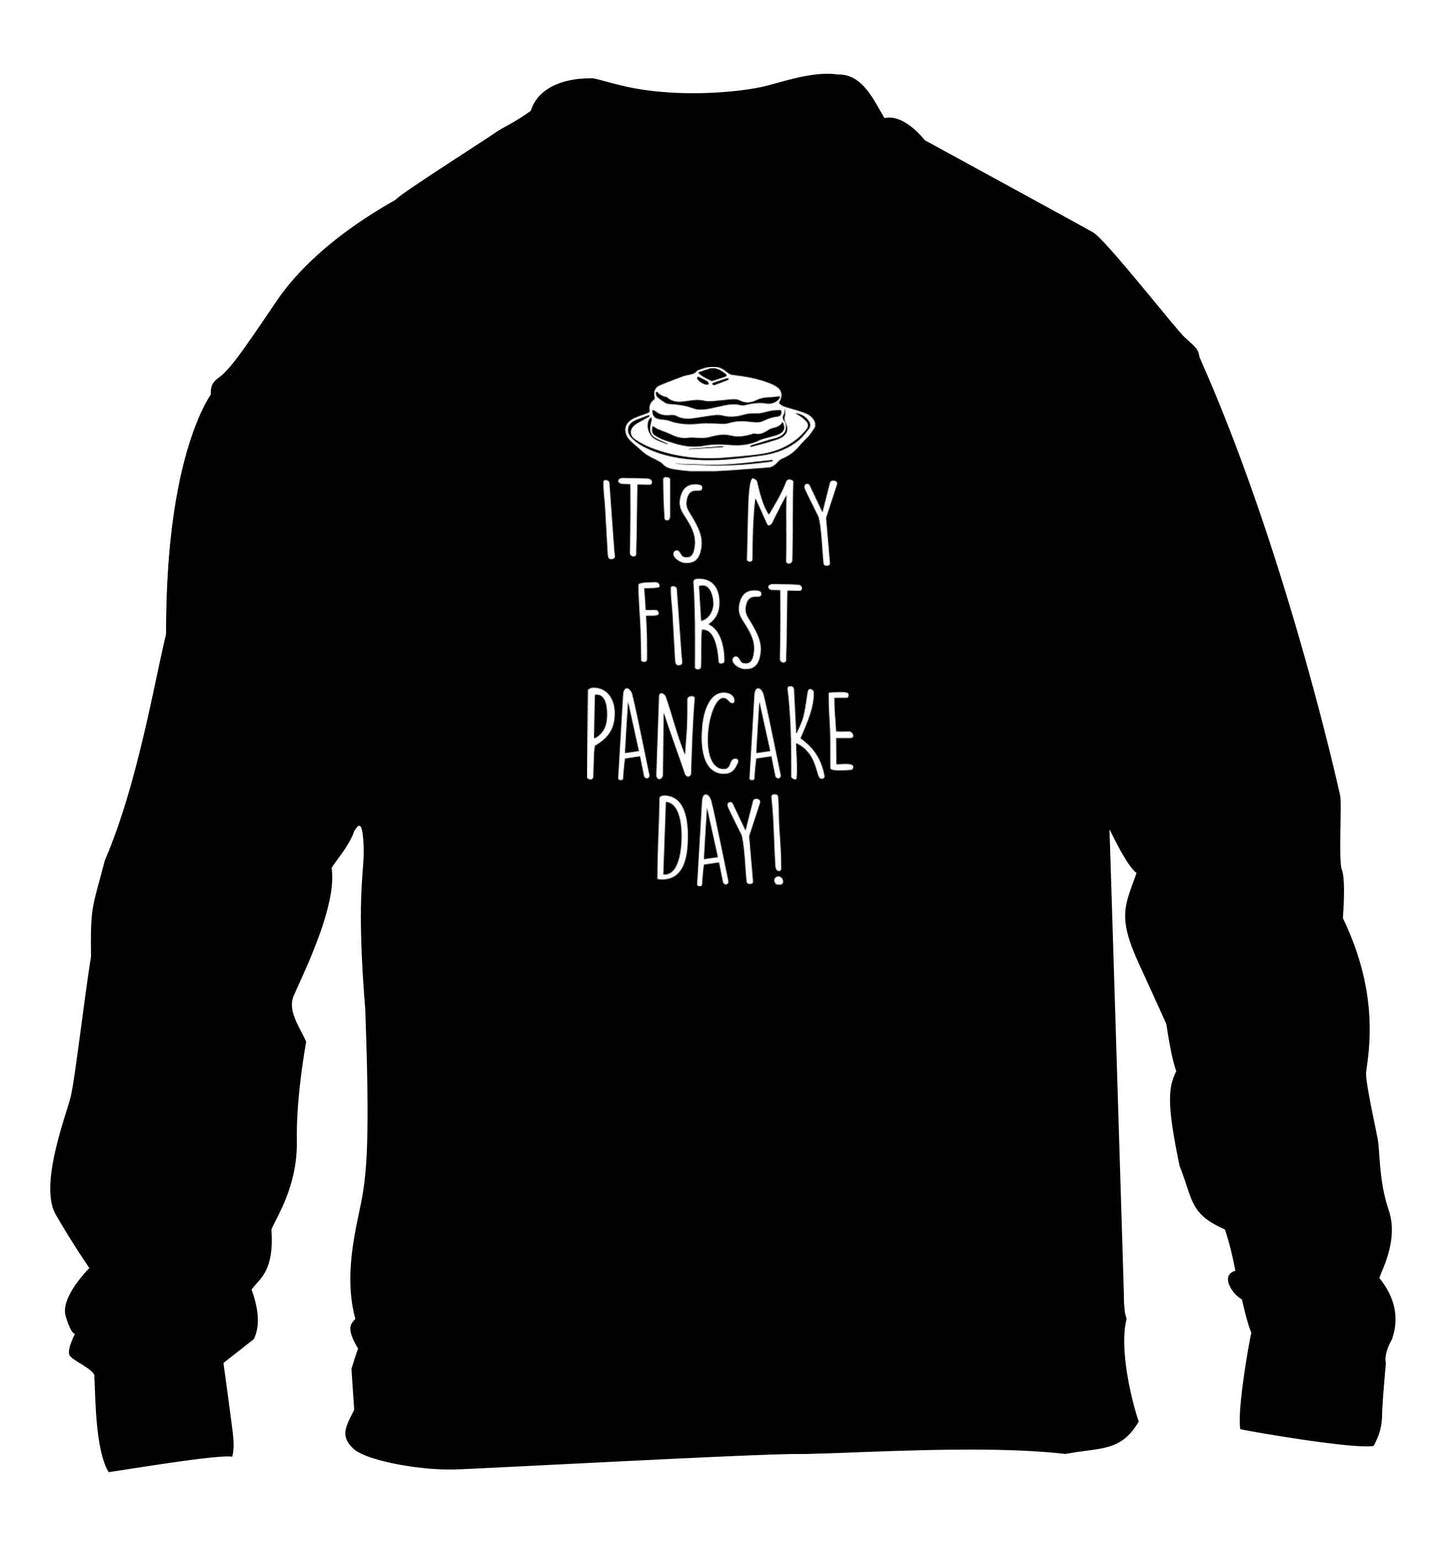 It's my first pancake day children's black sweater 12-13 Years